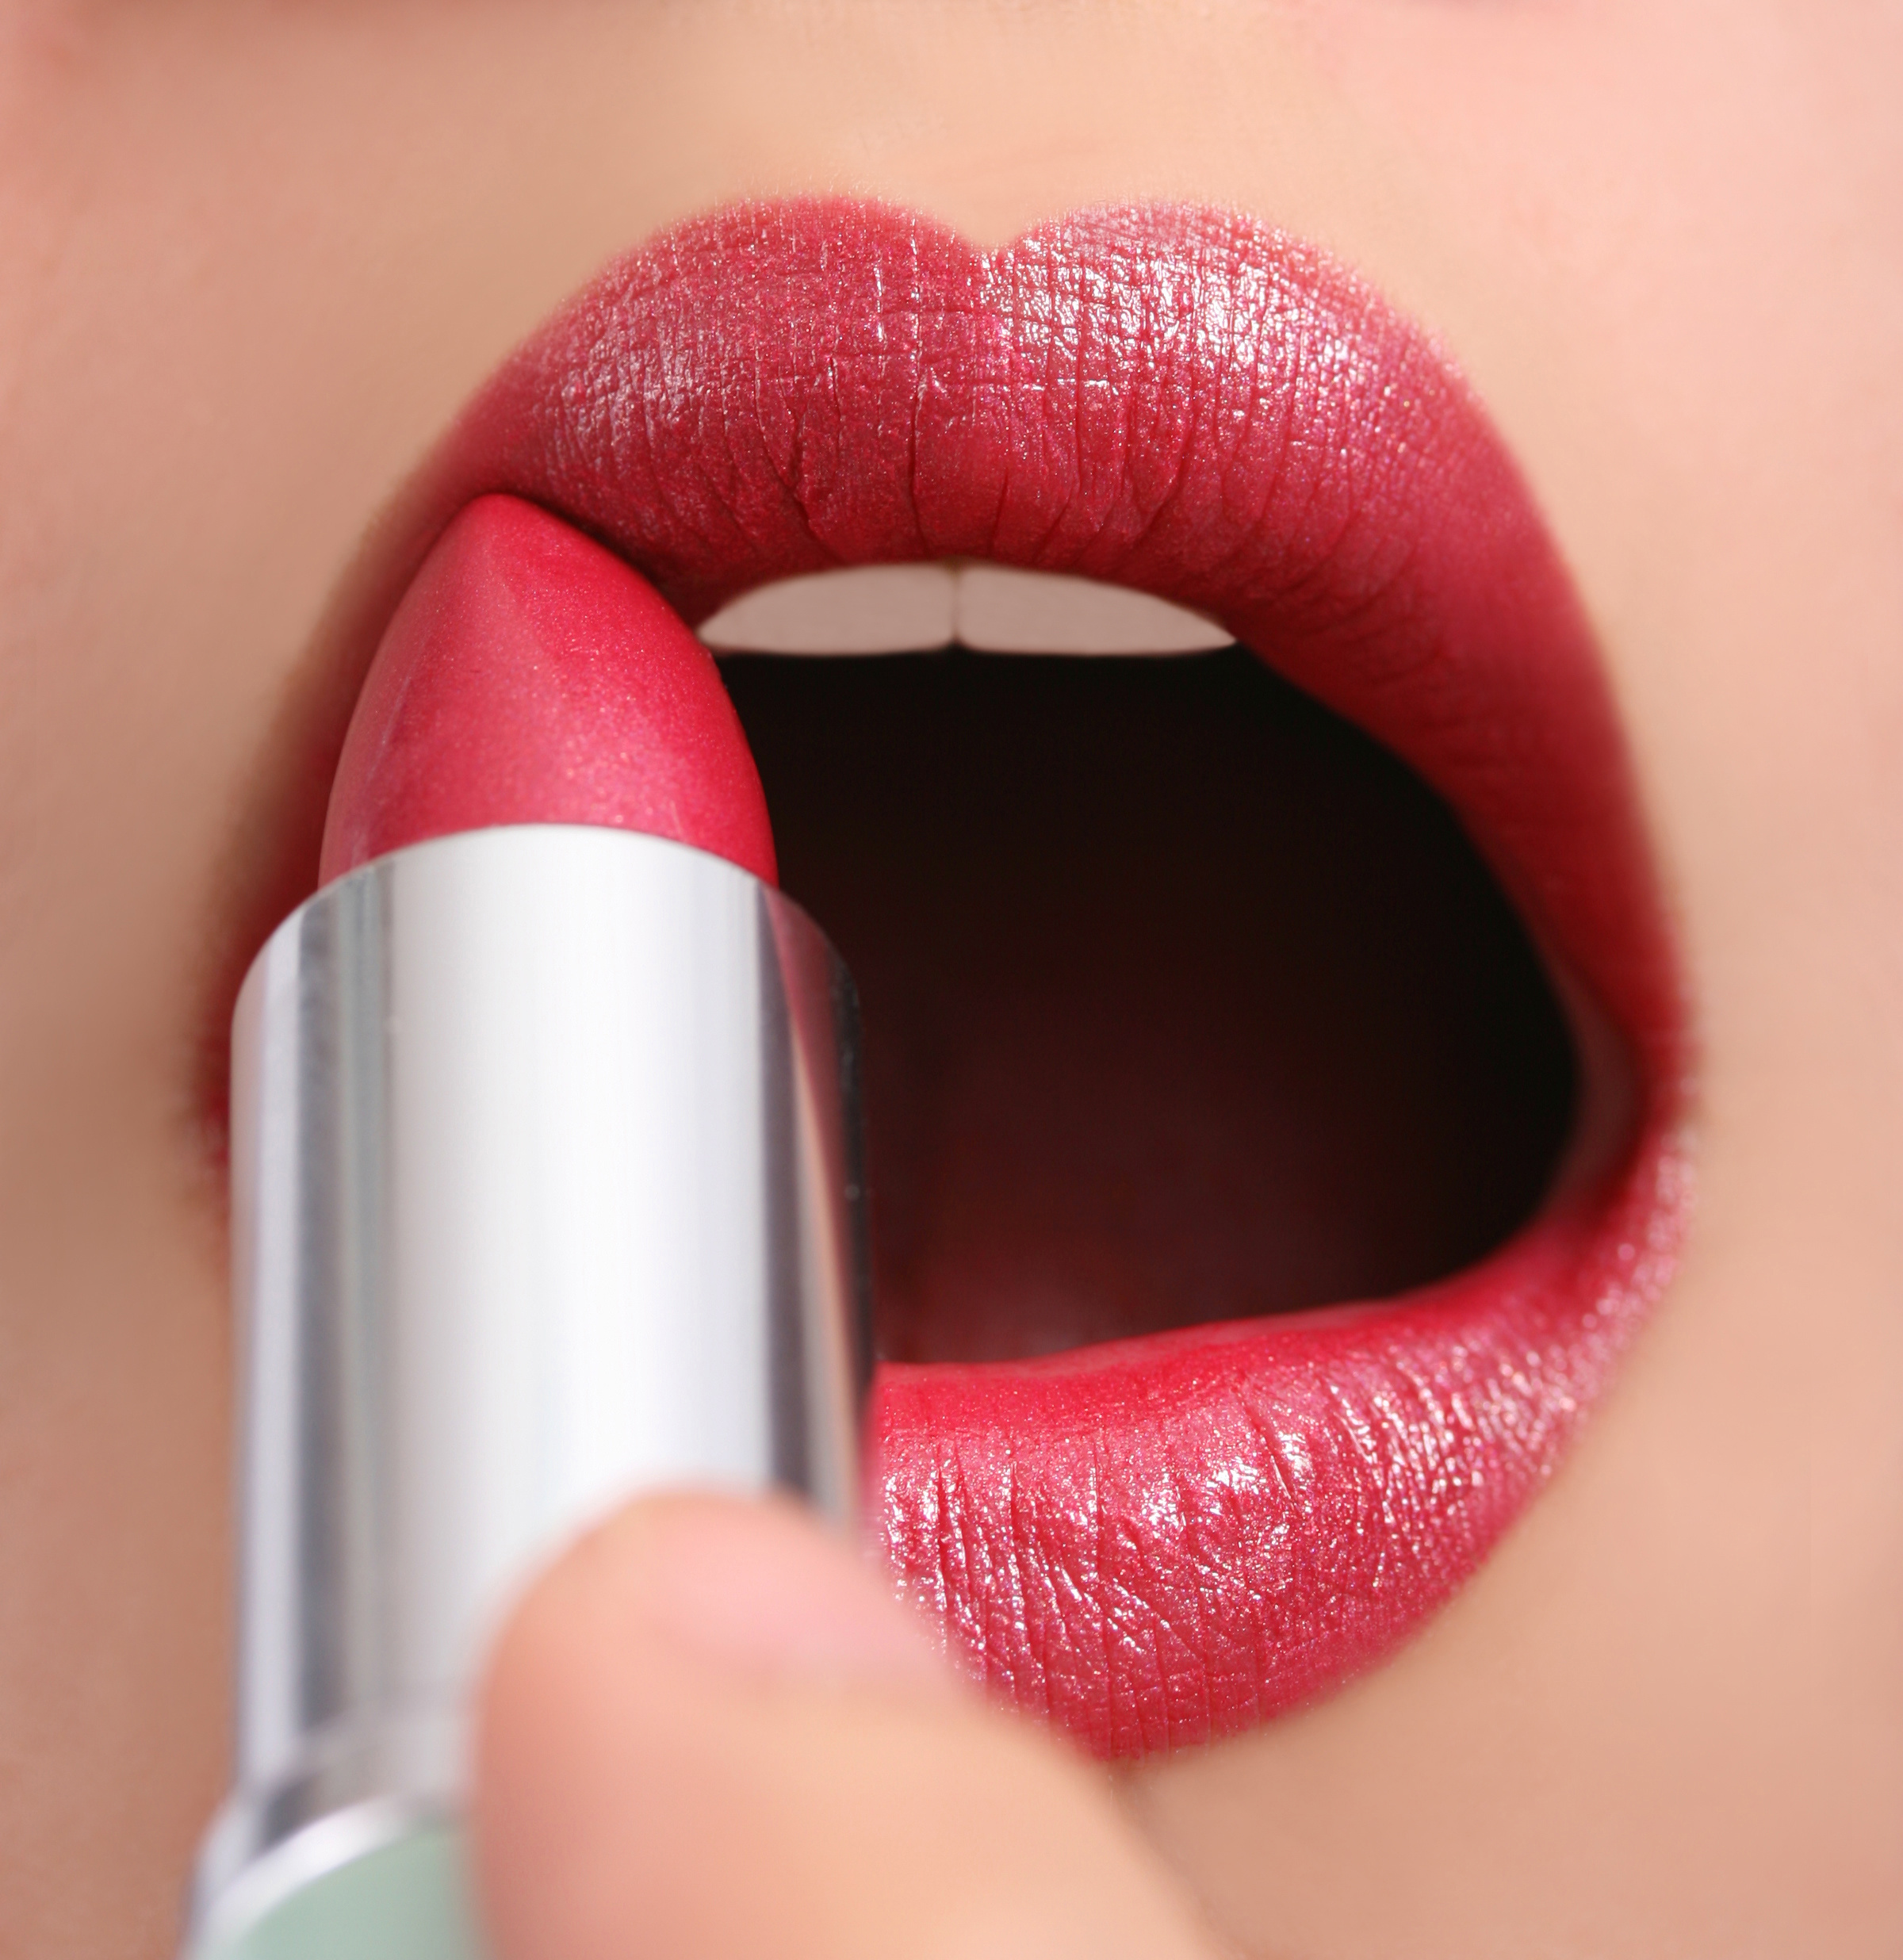 National Lipstick Day!